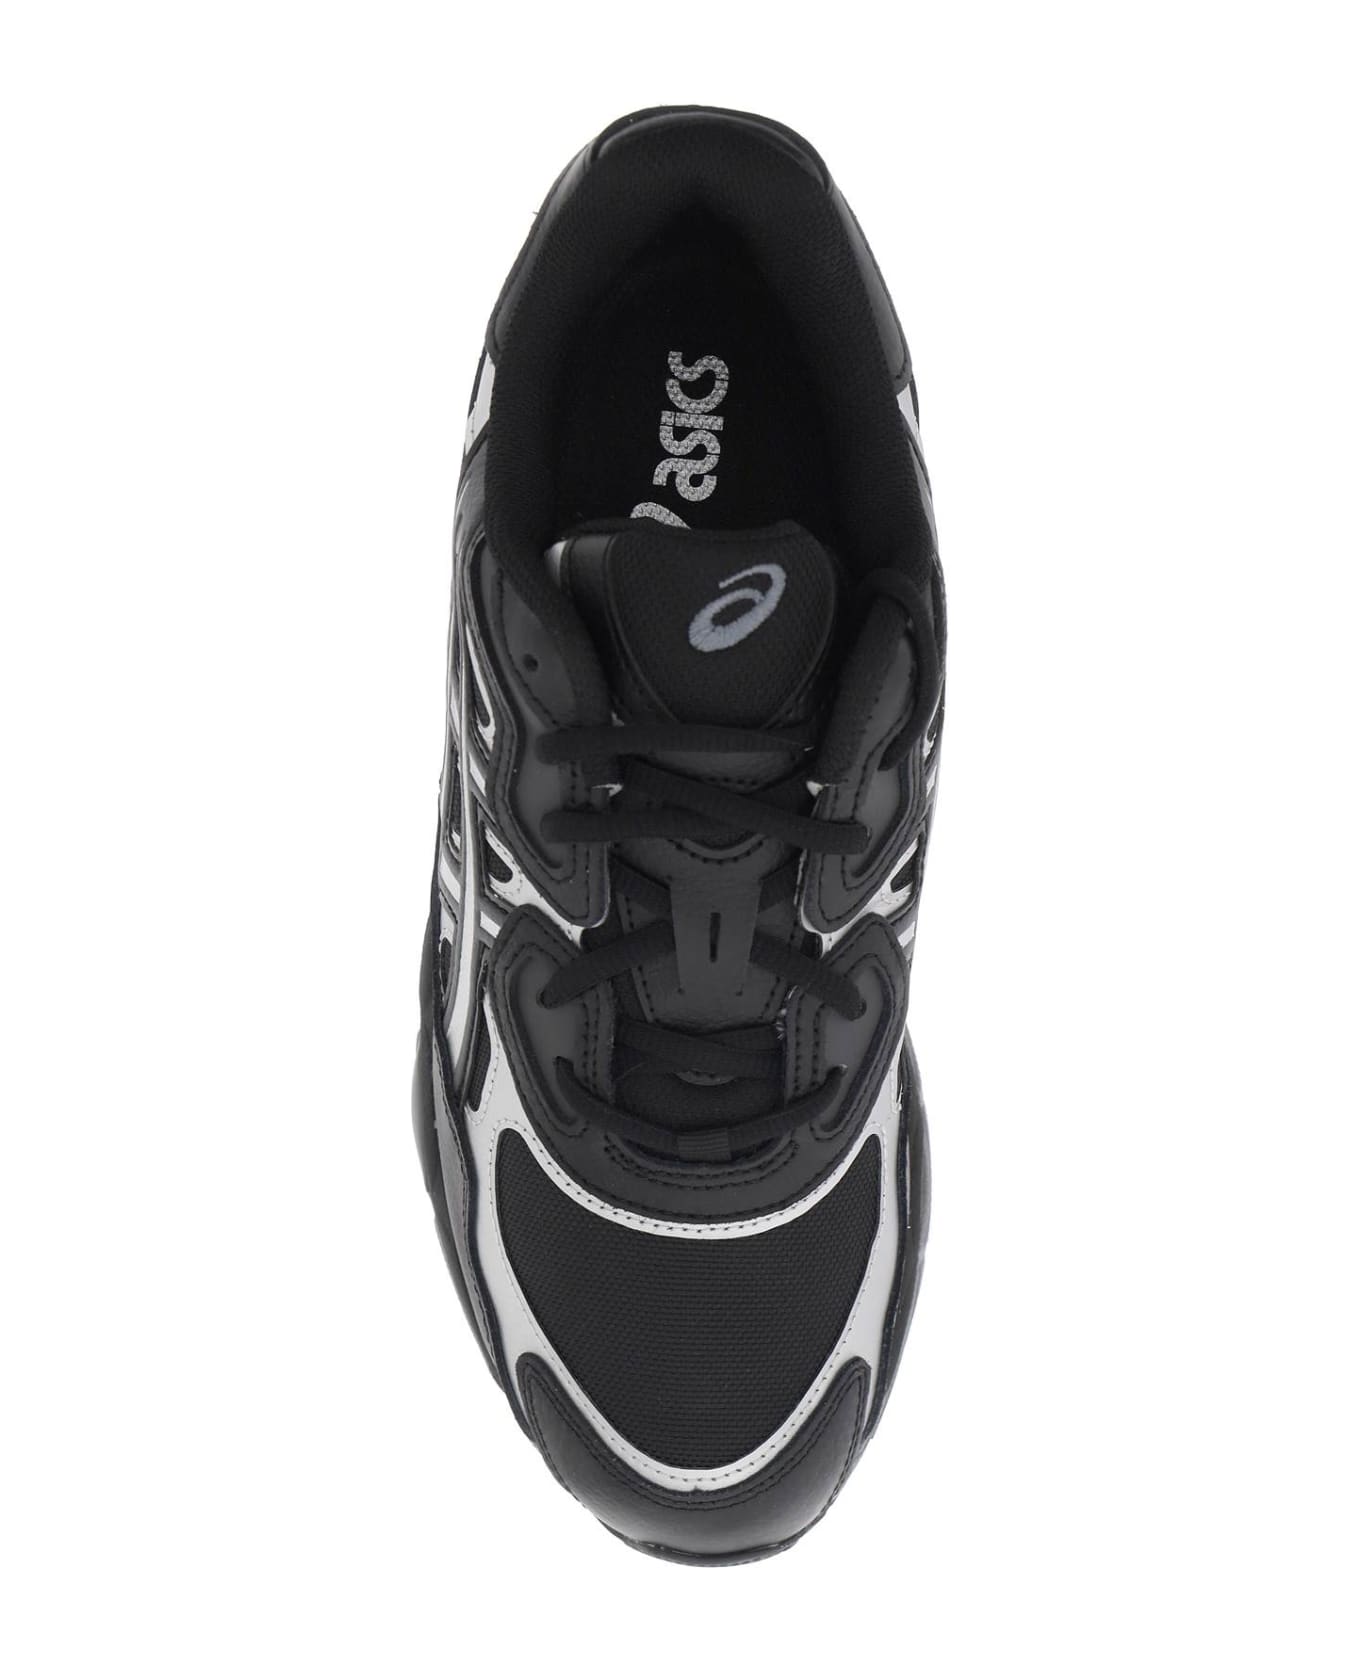 Asics Gel-kayano 14 Sneakers - BLACK GRAPHITE GREY (Black) スニーカー